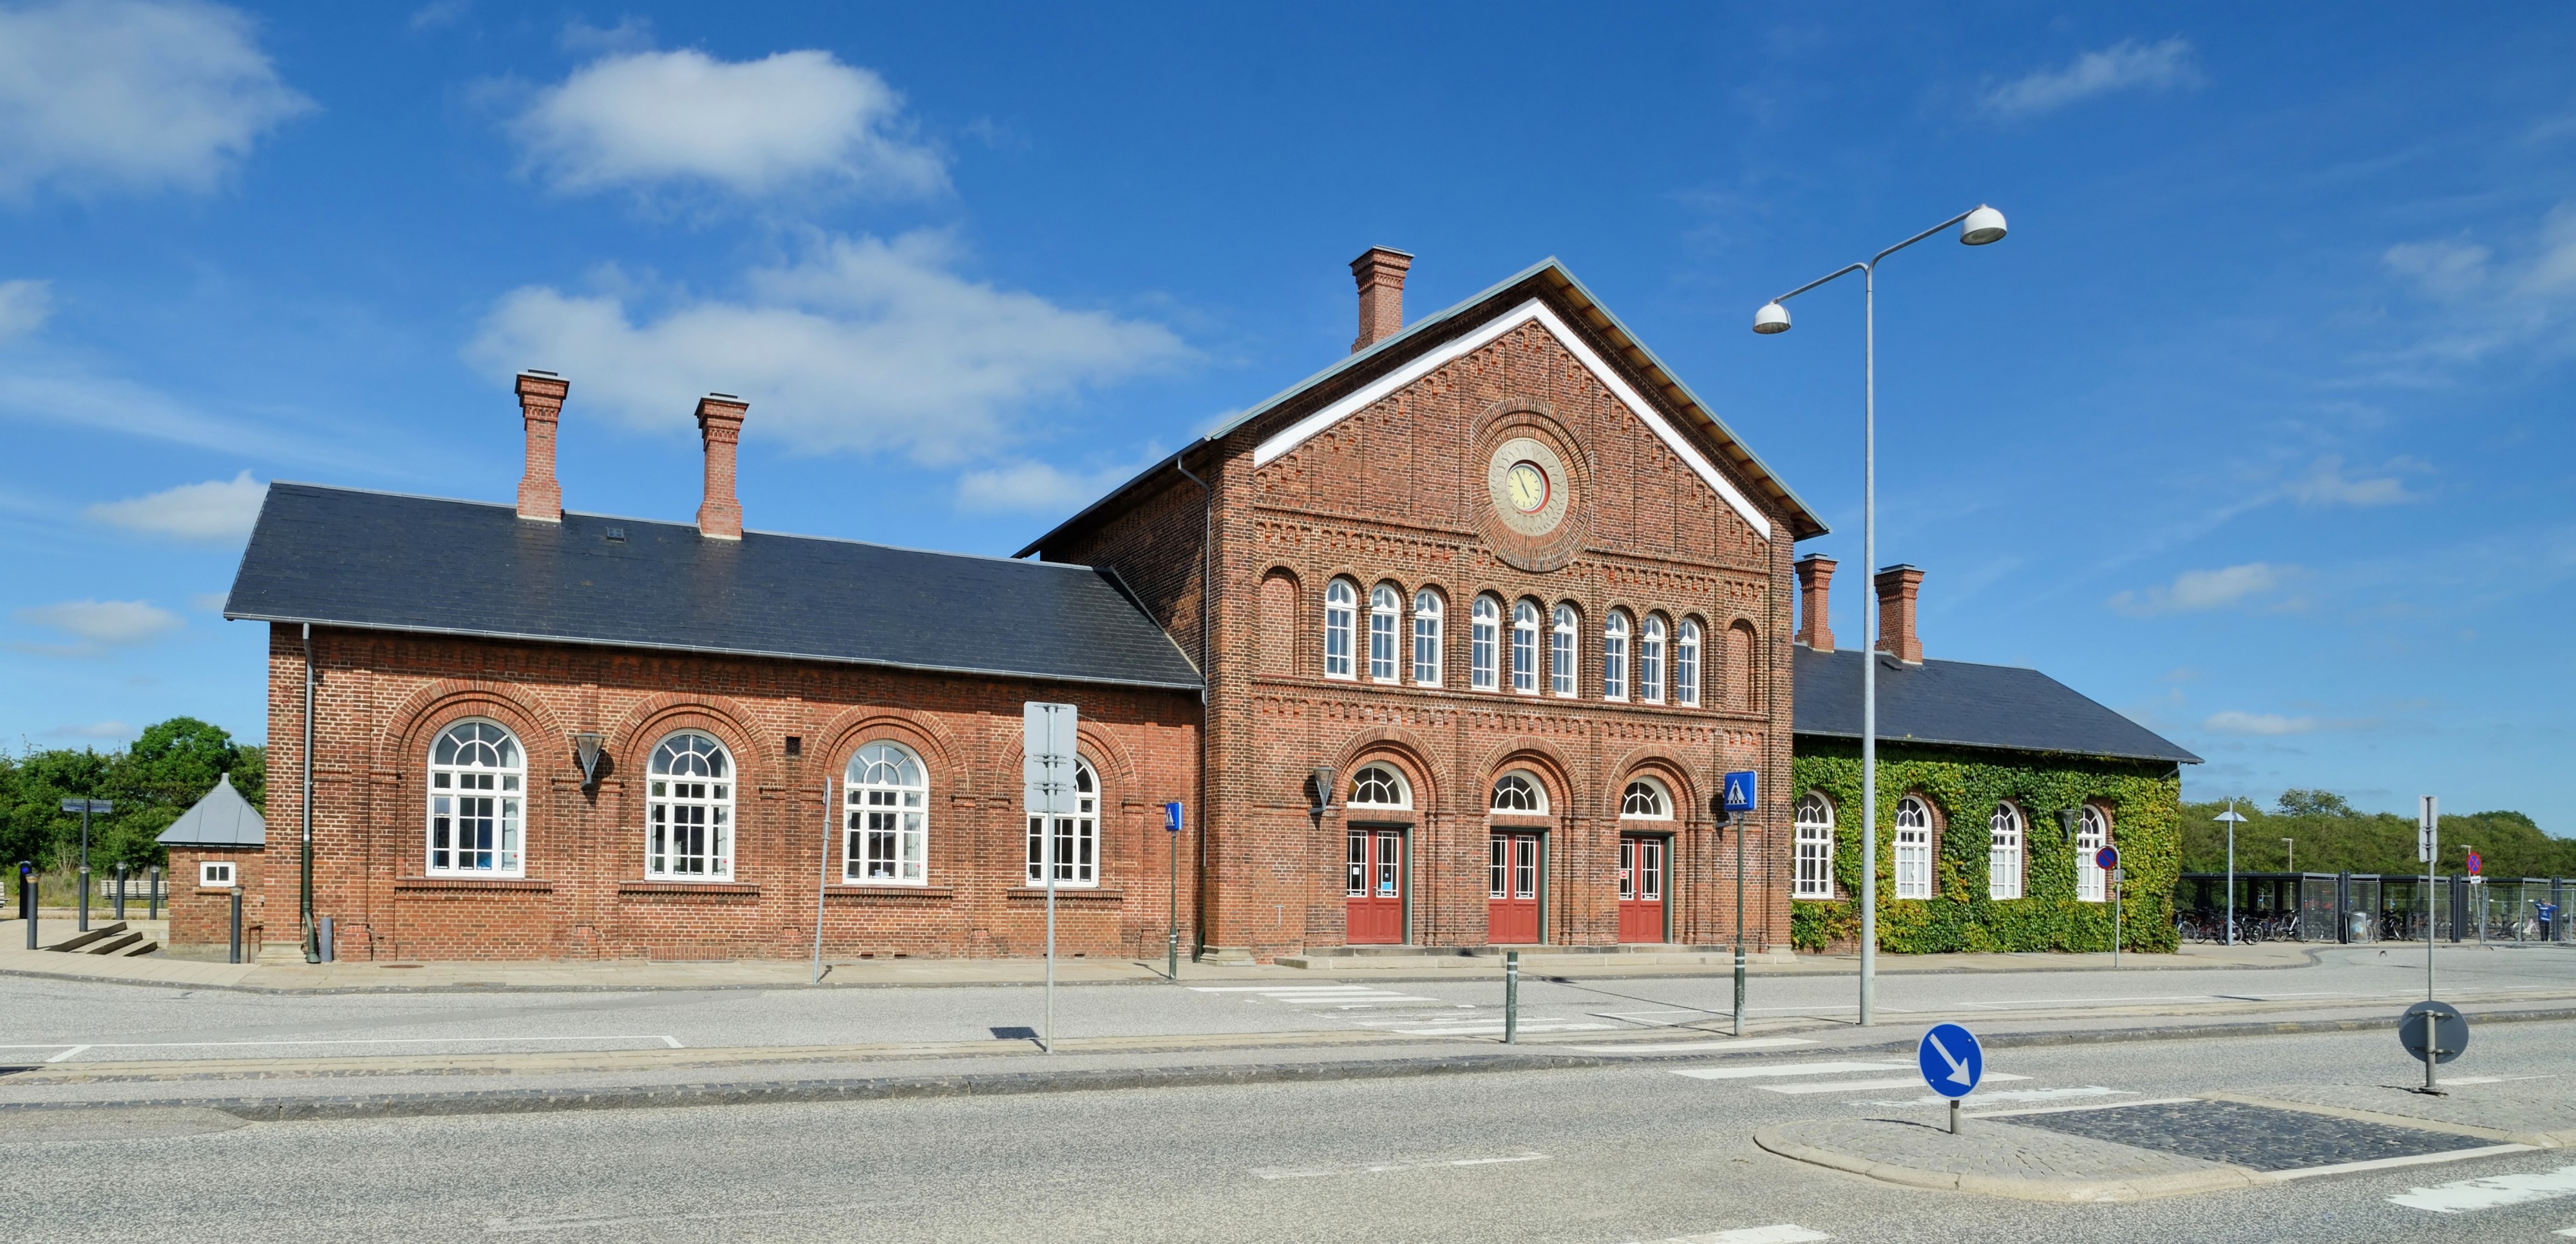 Ringkøbing - Train Station1